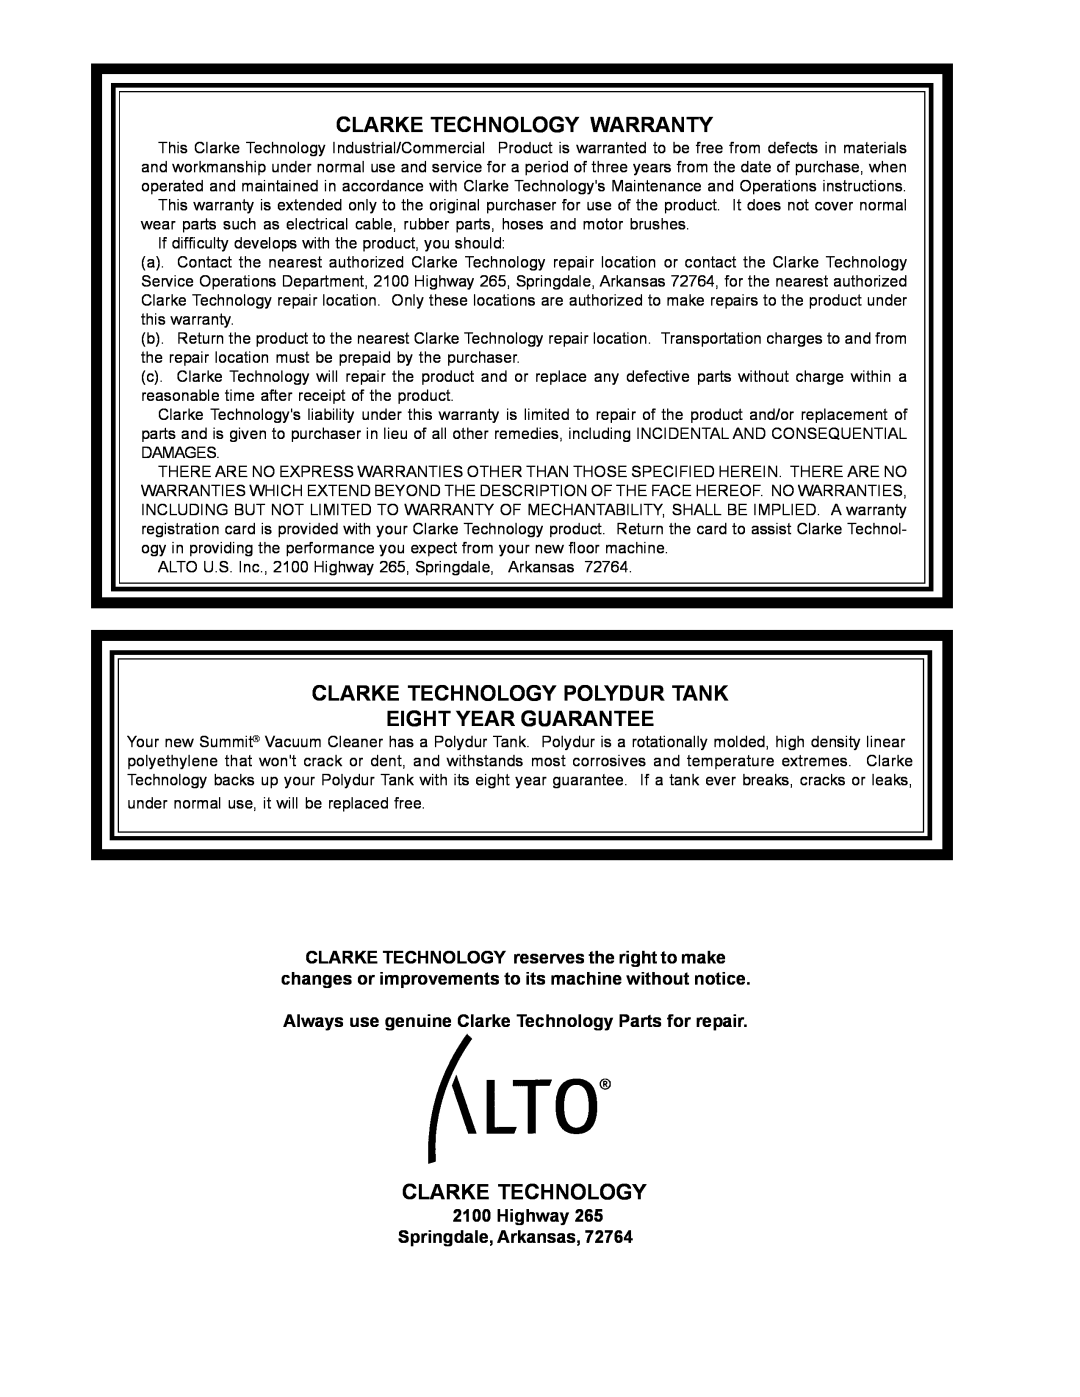 Nilfisk-ALTO Wet/Dry Vacuum Clarke Technology Warranty, Clarke Technology Polydur Tank, Eight Year Guarantee 